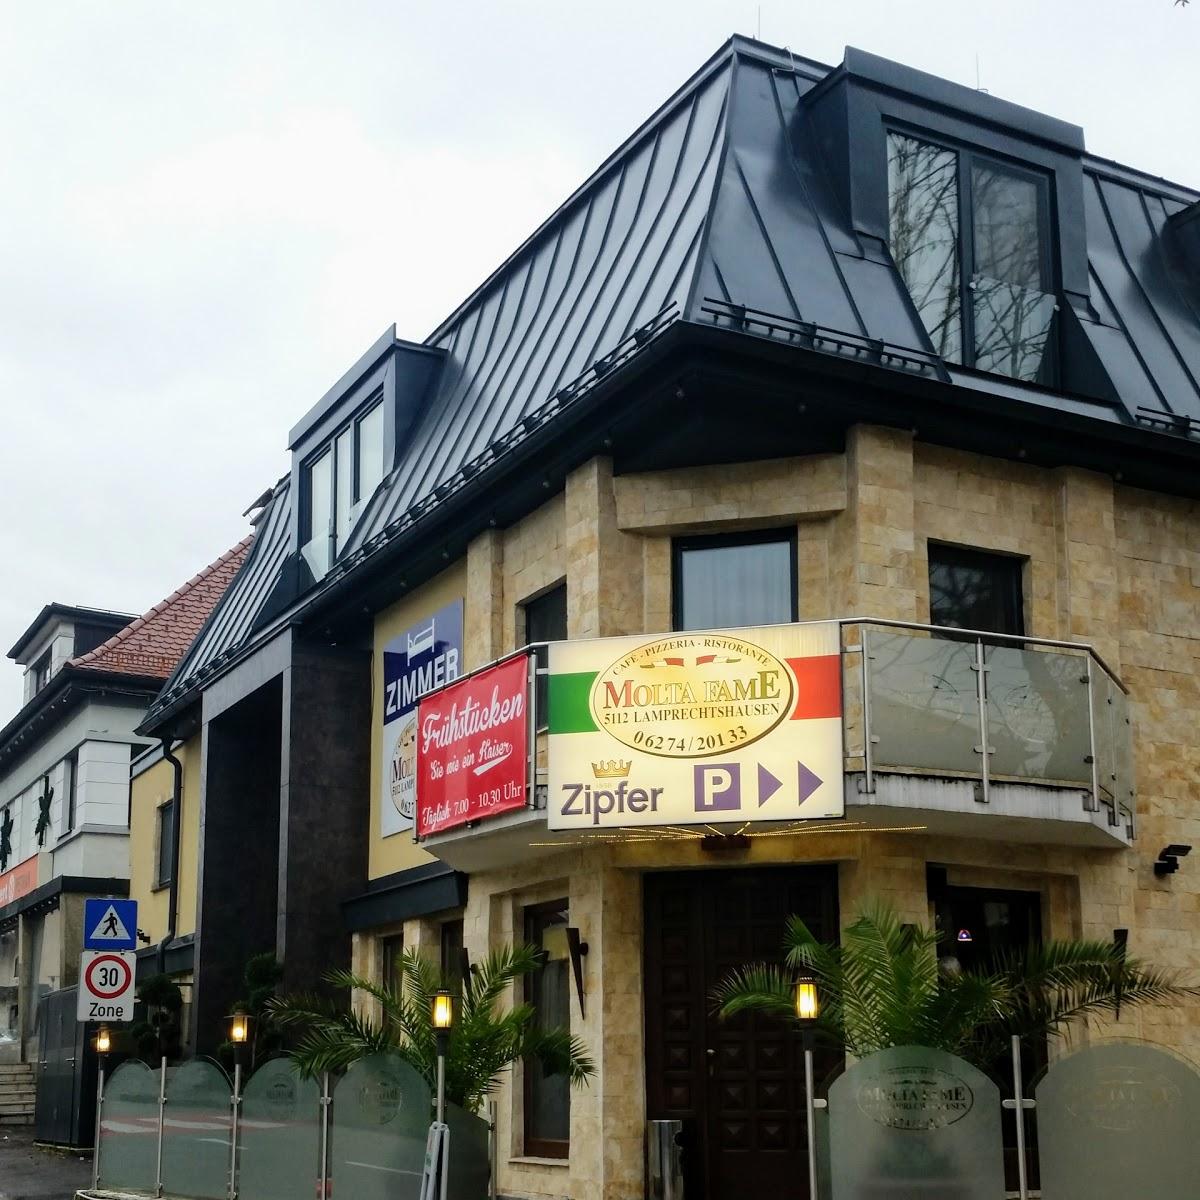 Restaurant "Molta Fame" in Lamprechtshausen